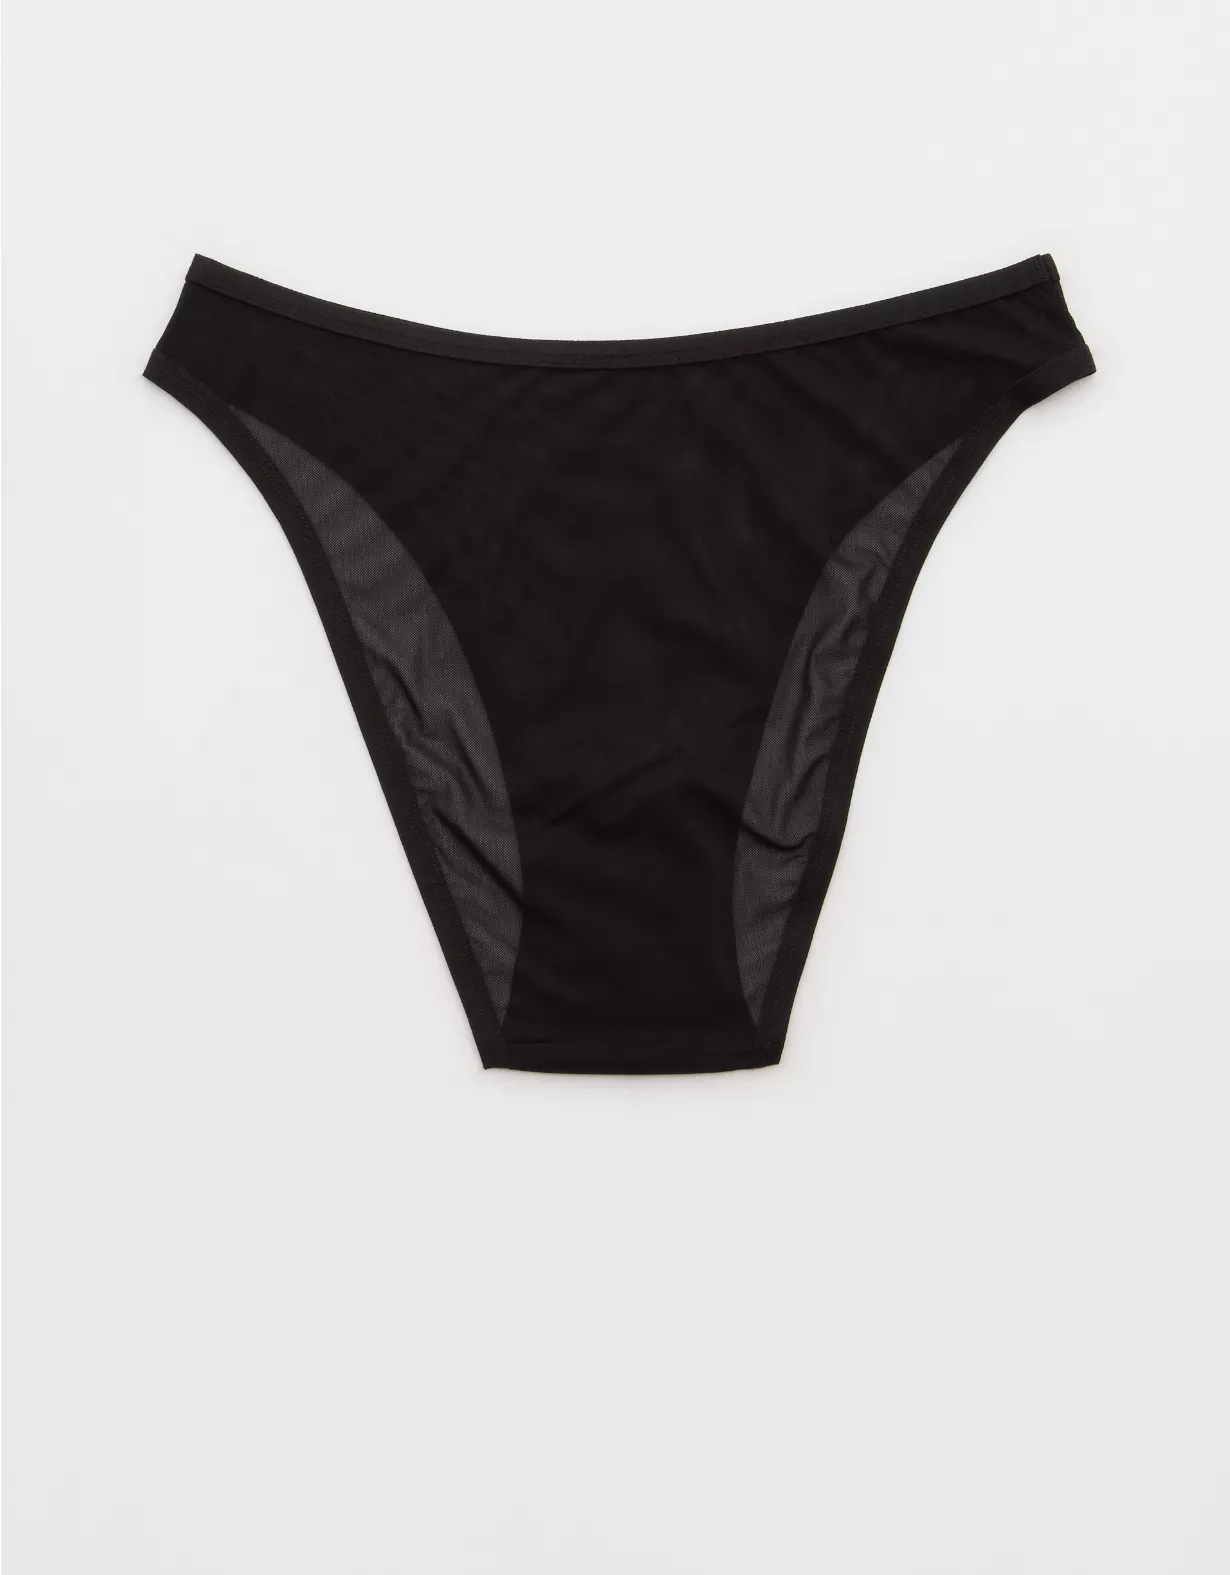 SMOOTHEZ Mesh High Cut Bikini Underwear